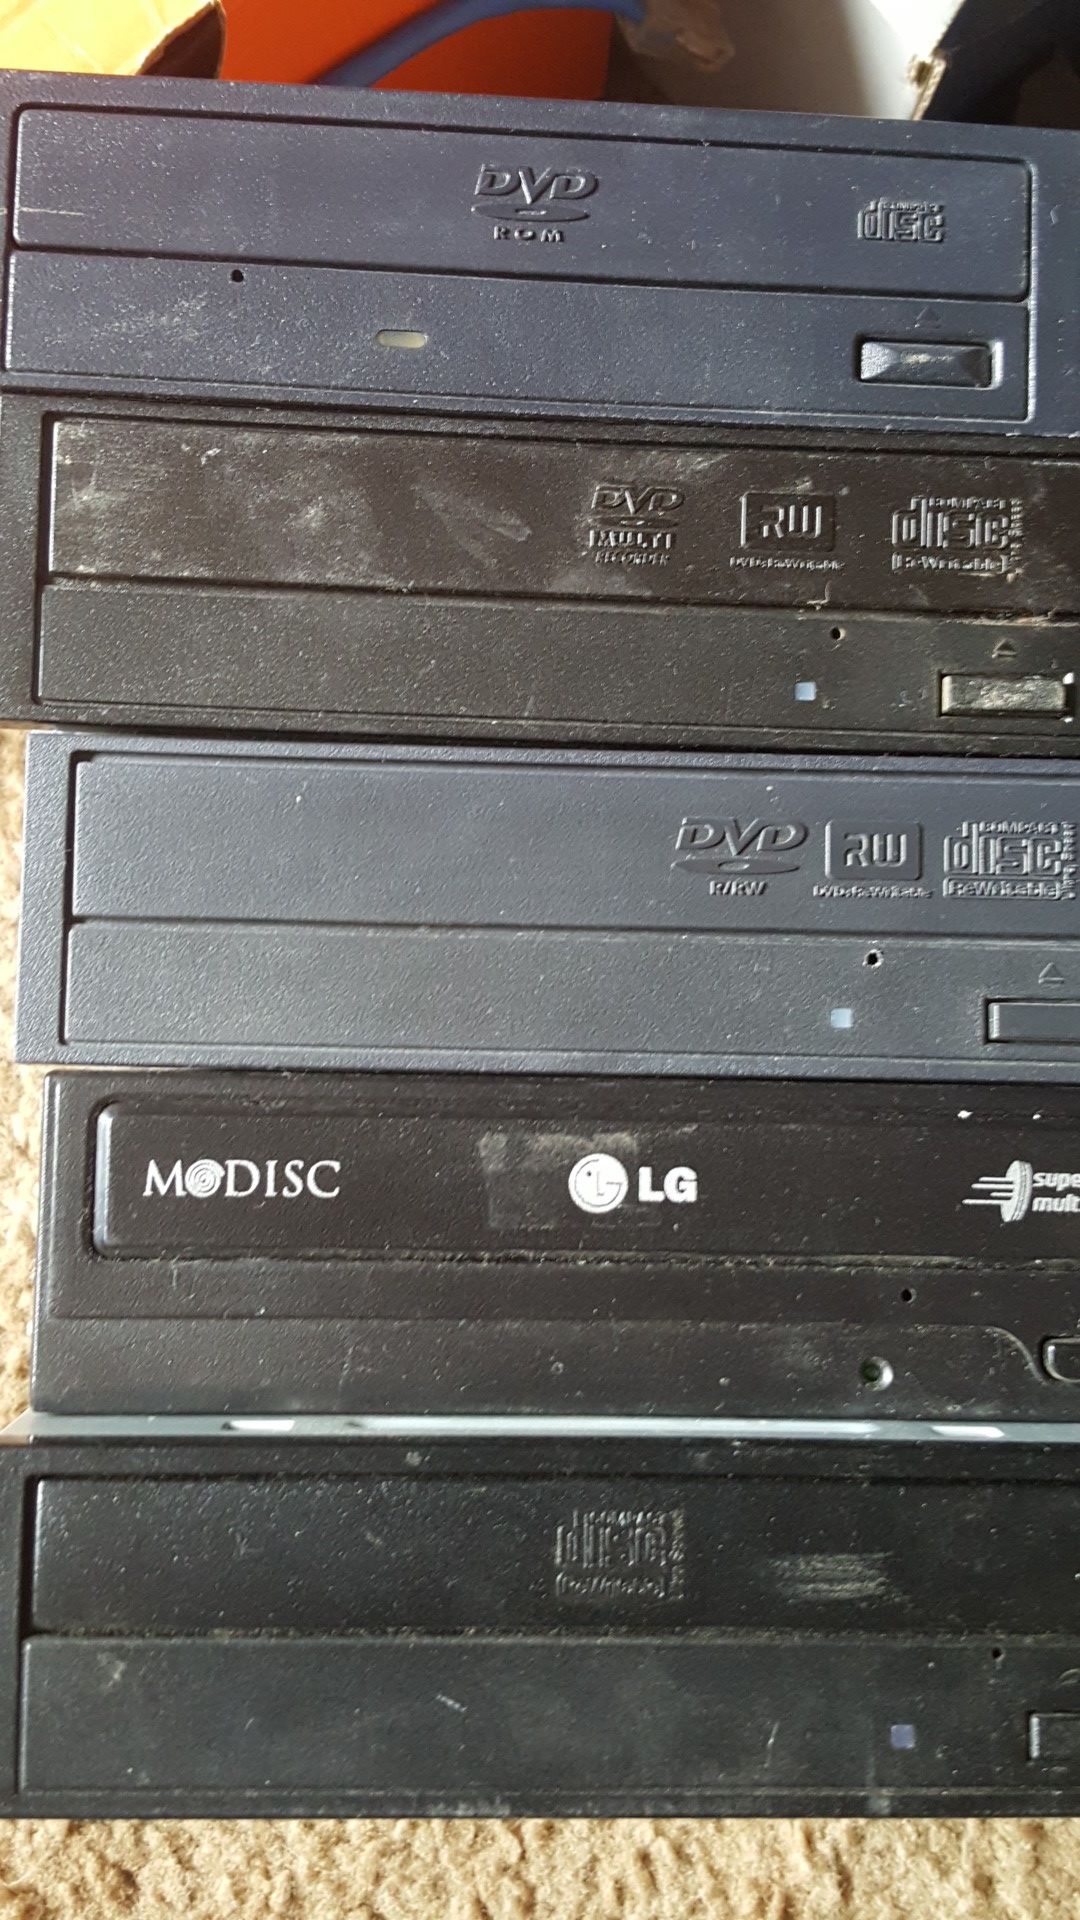 Used Internal CD/DVD Drives